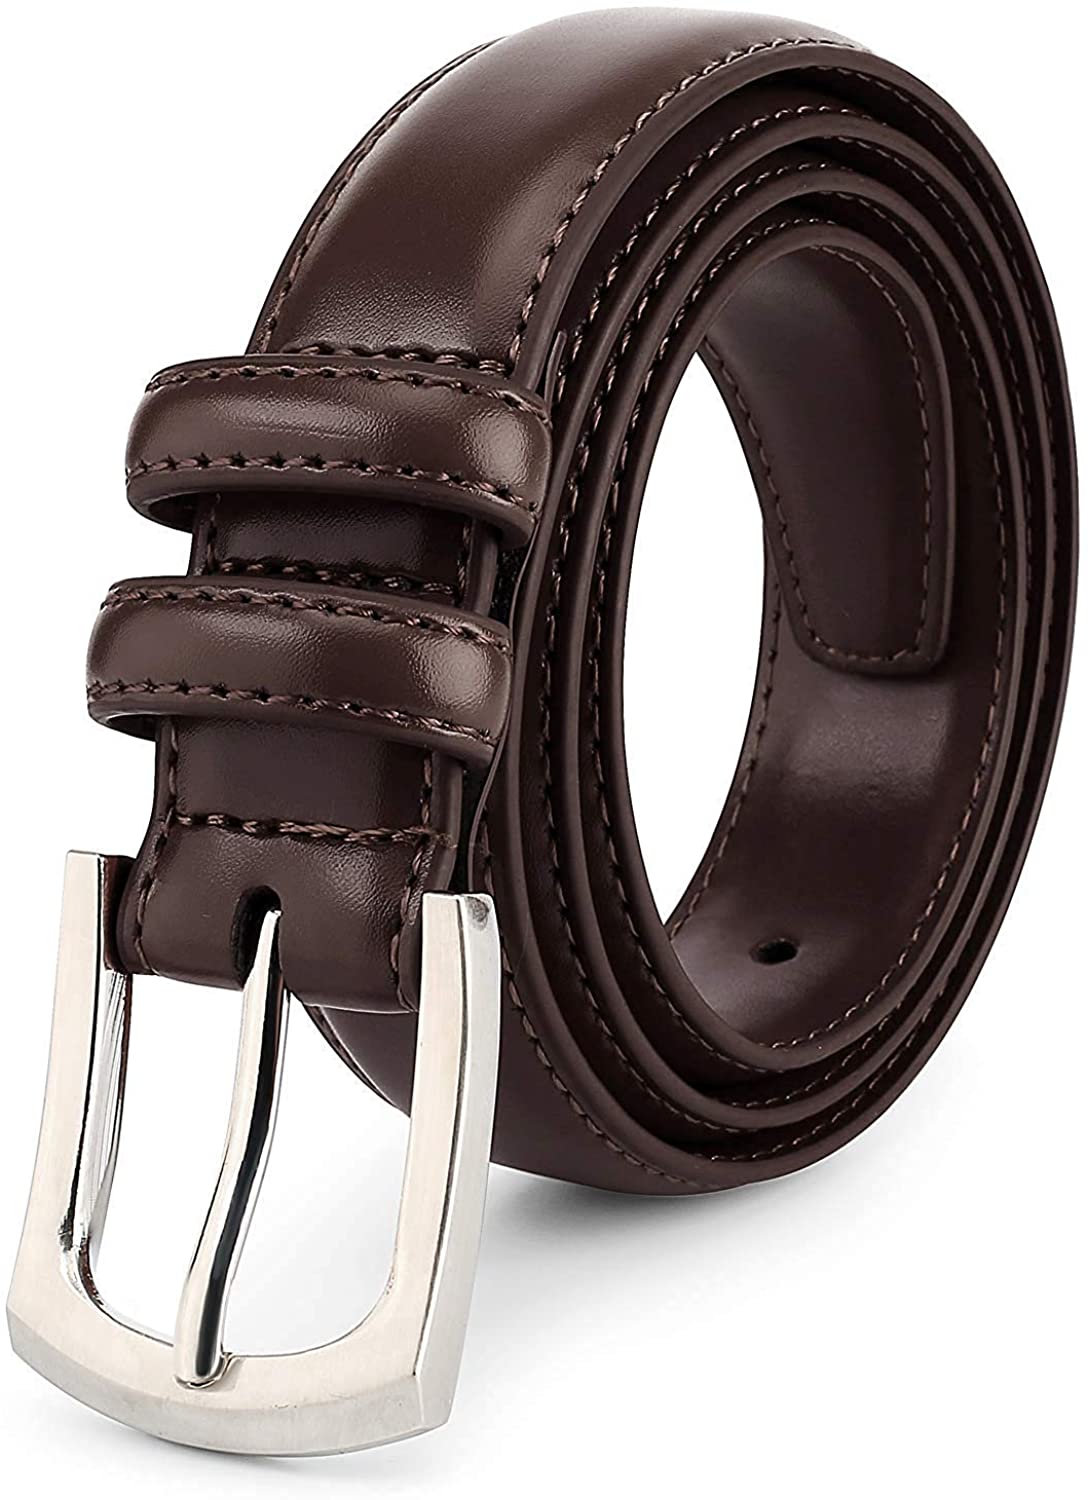 Men's Dress Belt 'ALL GENUINE LEATHER' Stitching 30mm Regular Big and ...